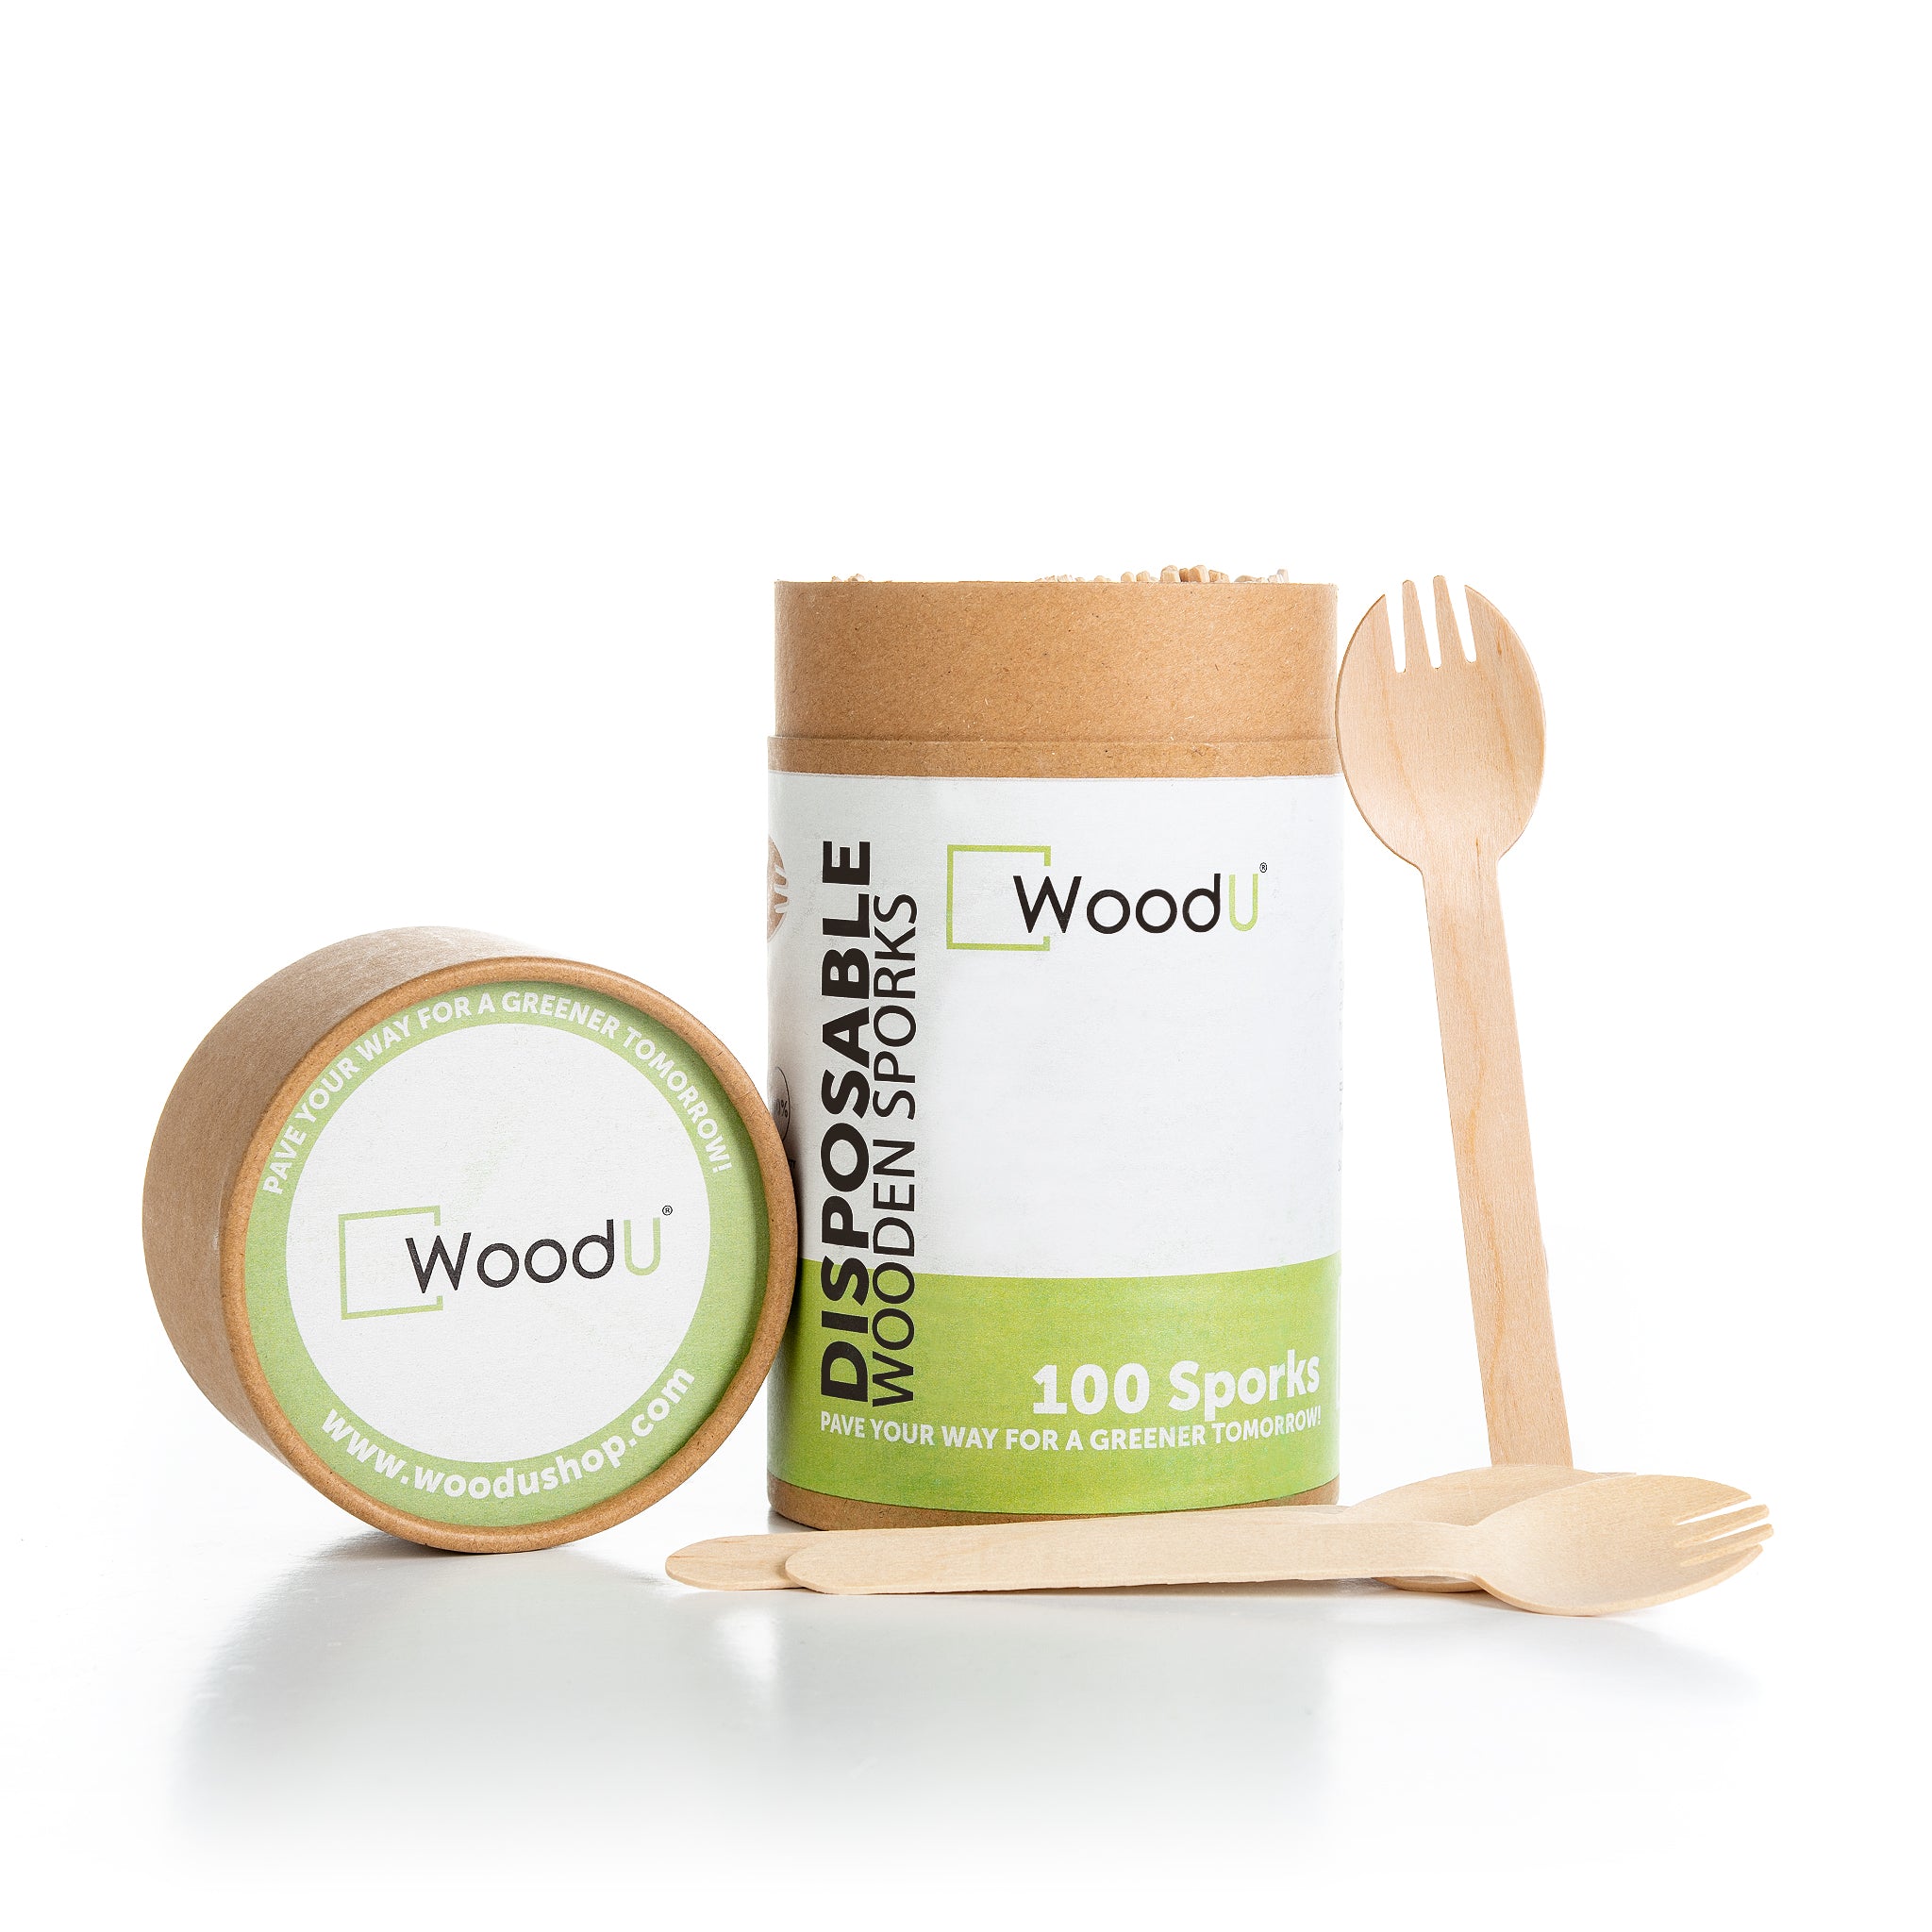 Woodland Premium Disposable Wooden Cutlery – Biodegradable Utensils Set of  Forks, Spoons, Knives – Bonus Wooden Silverware Packs by Nook & Fork